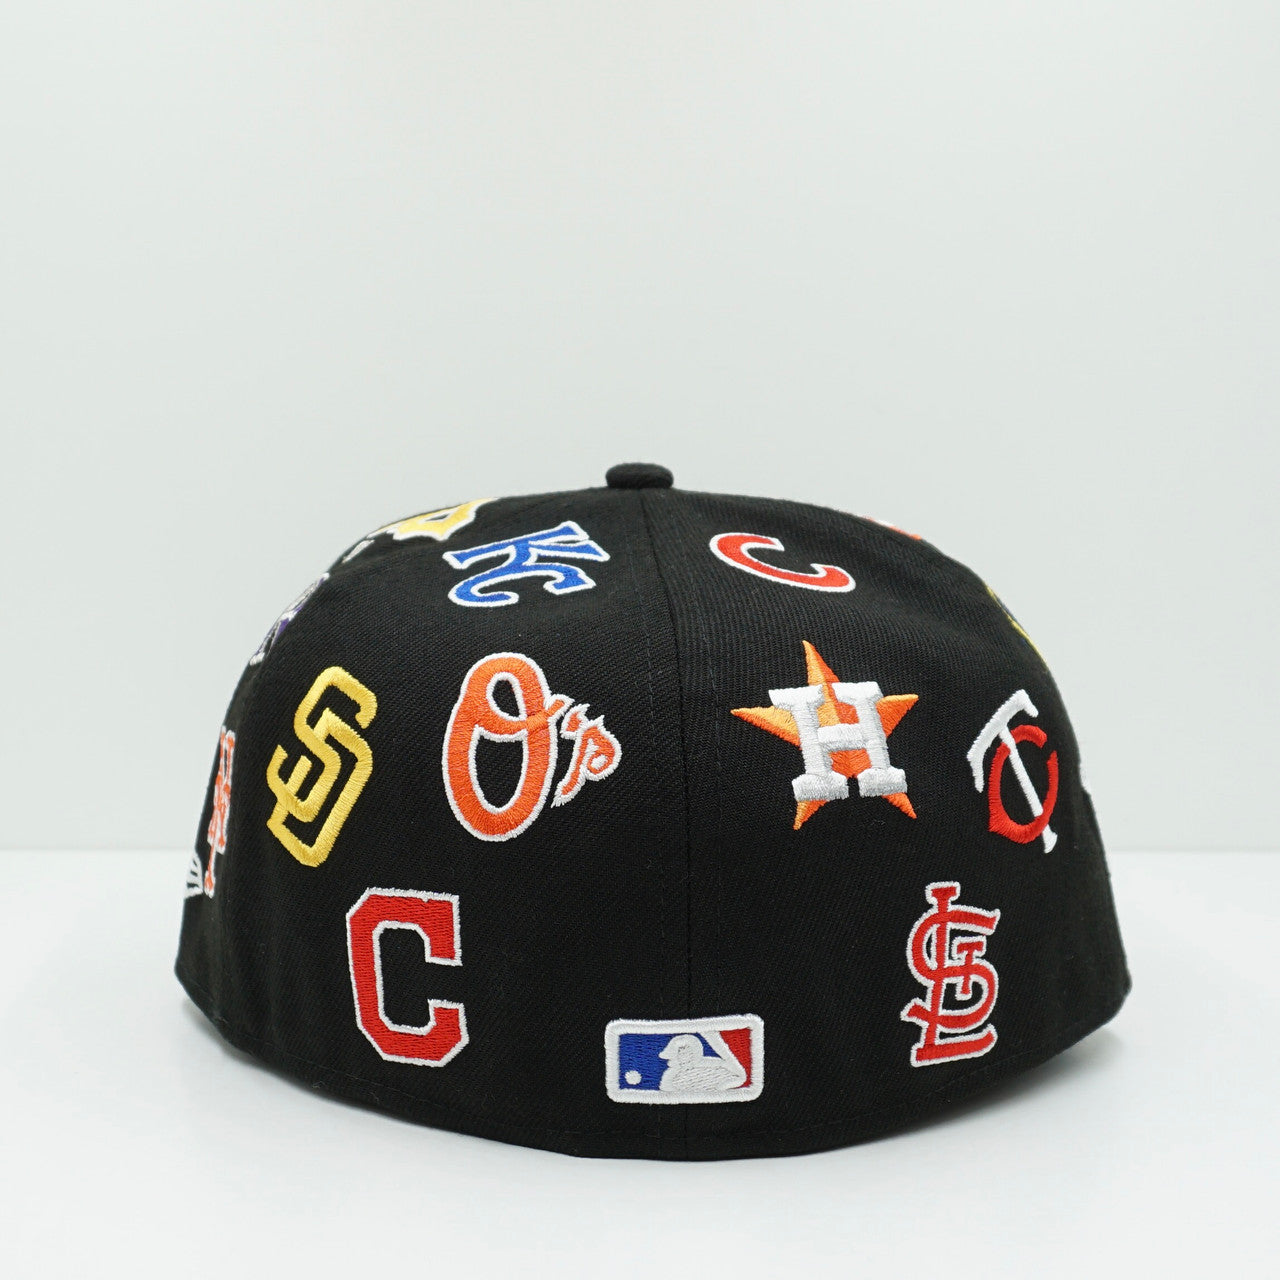 New Era MLB Team Logos Fitted Cap